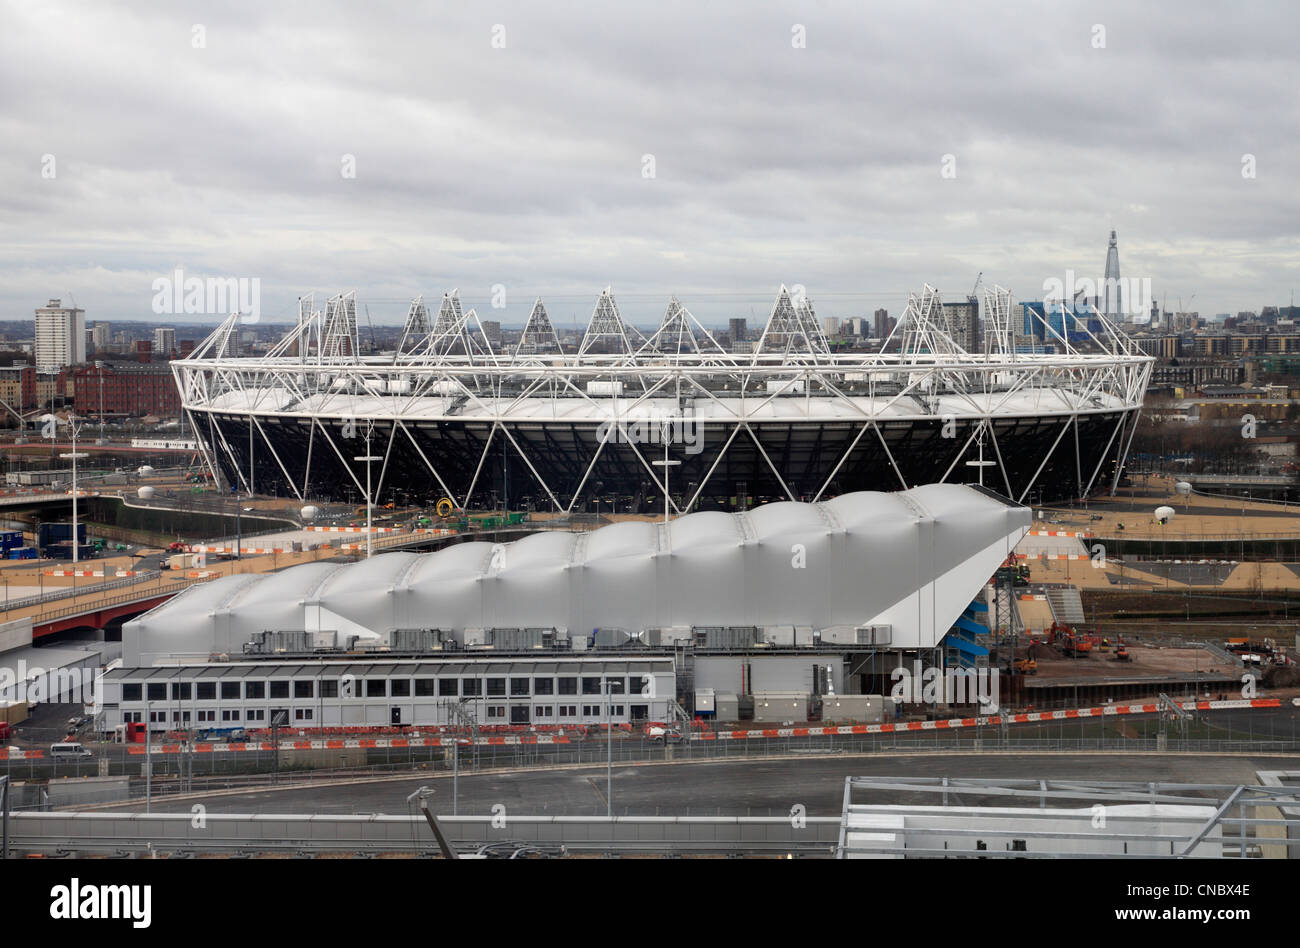 Olympia Leichtathletik Stadion Spiele Parken Stratford London Olympics 2012 Stockfoto